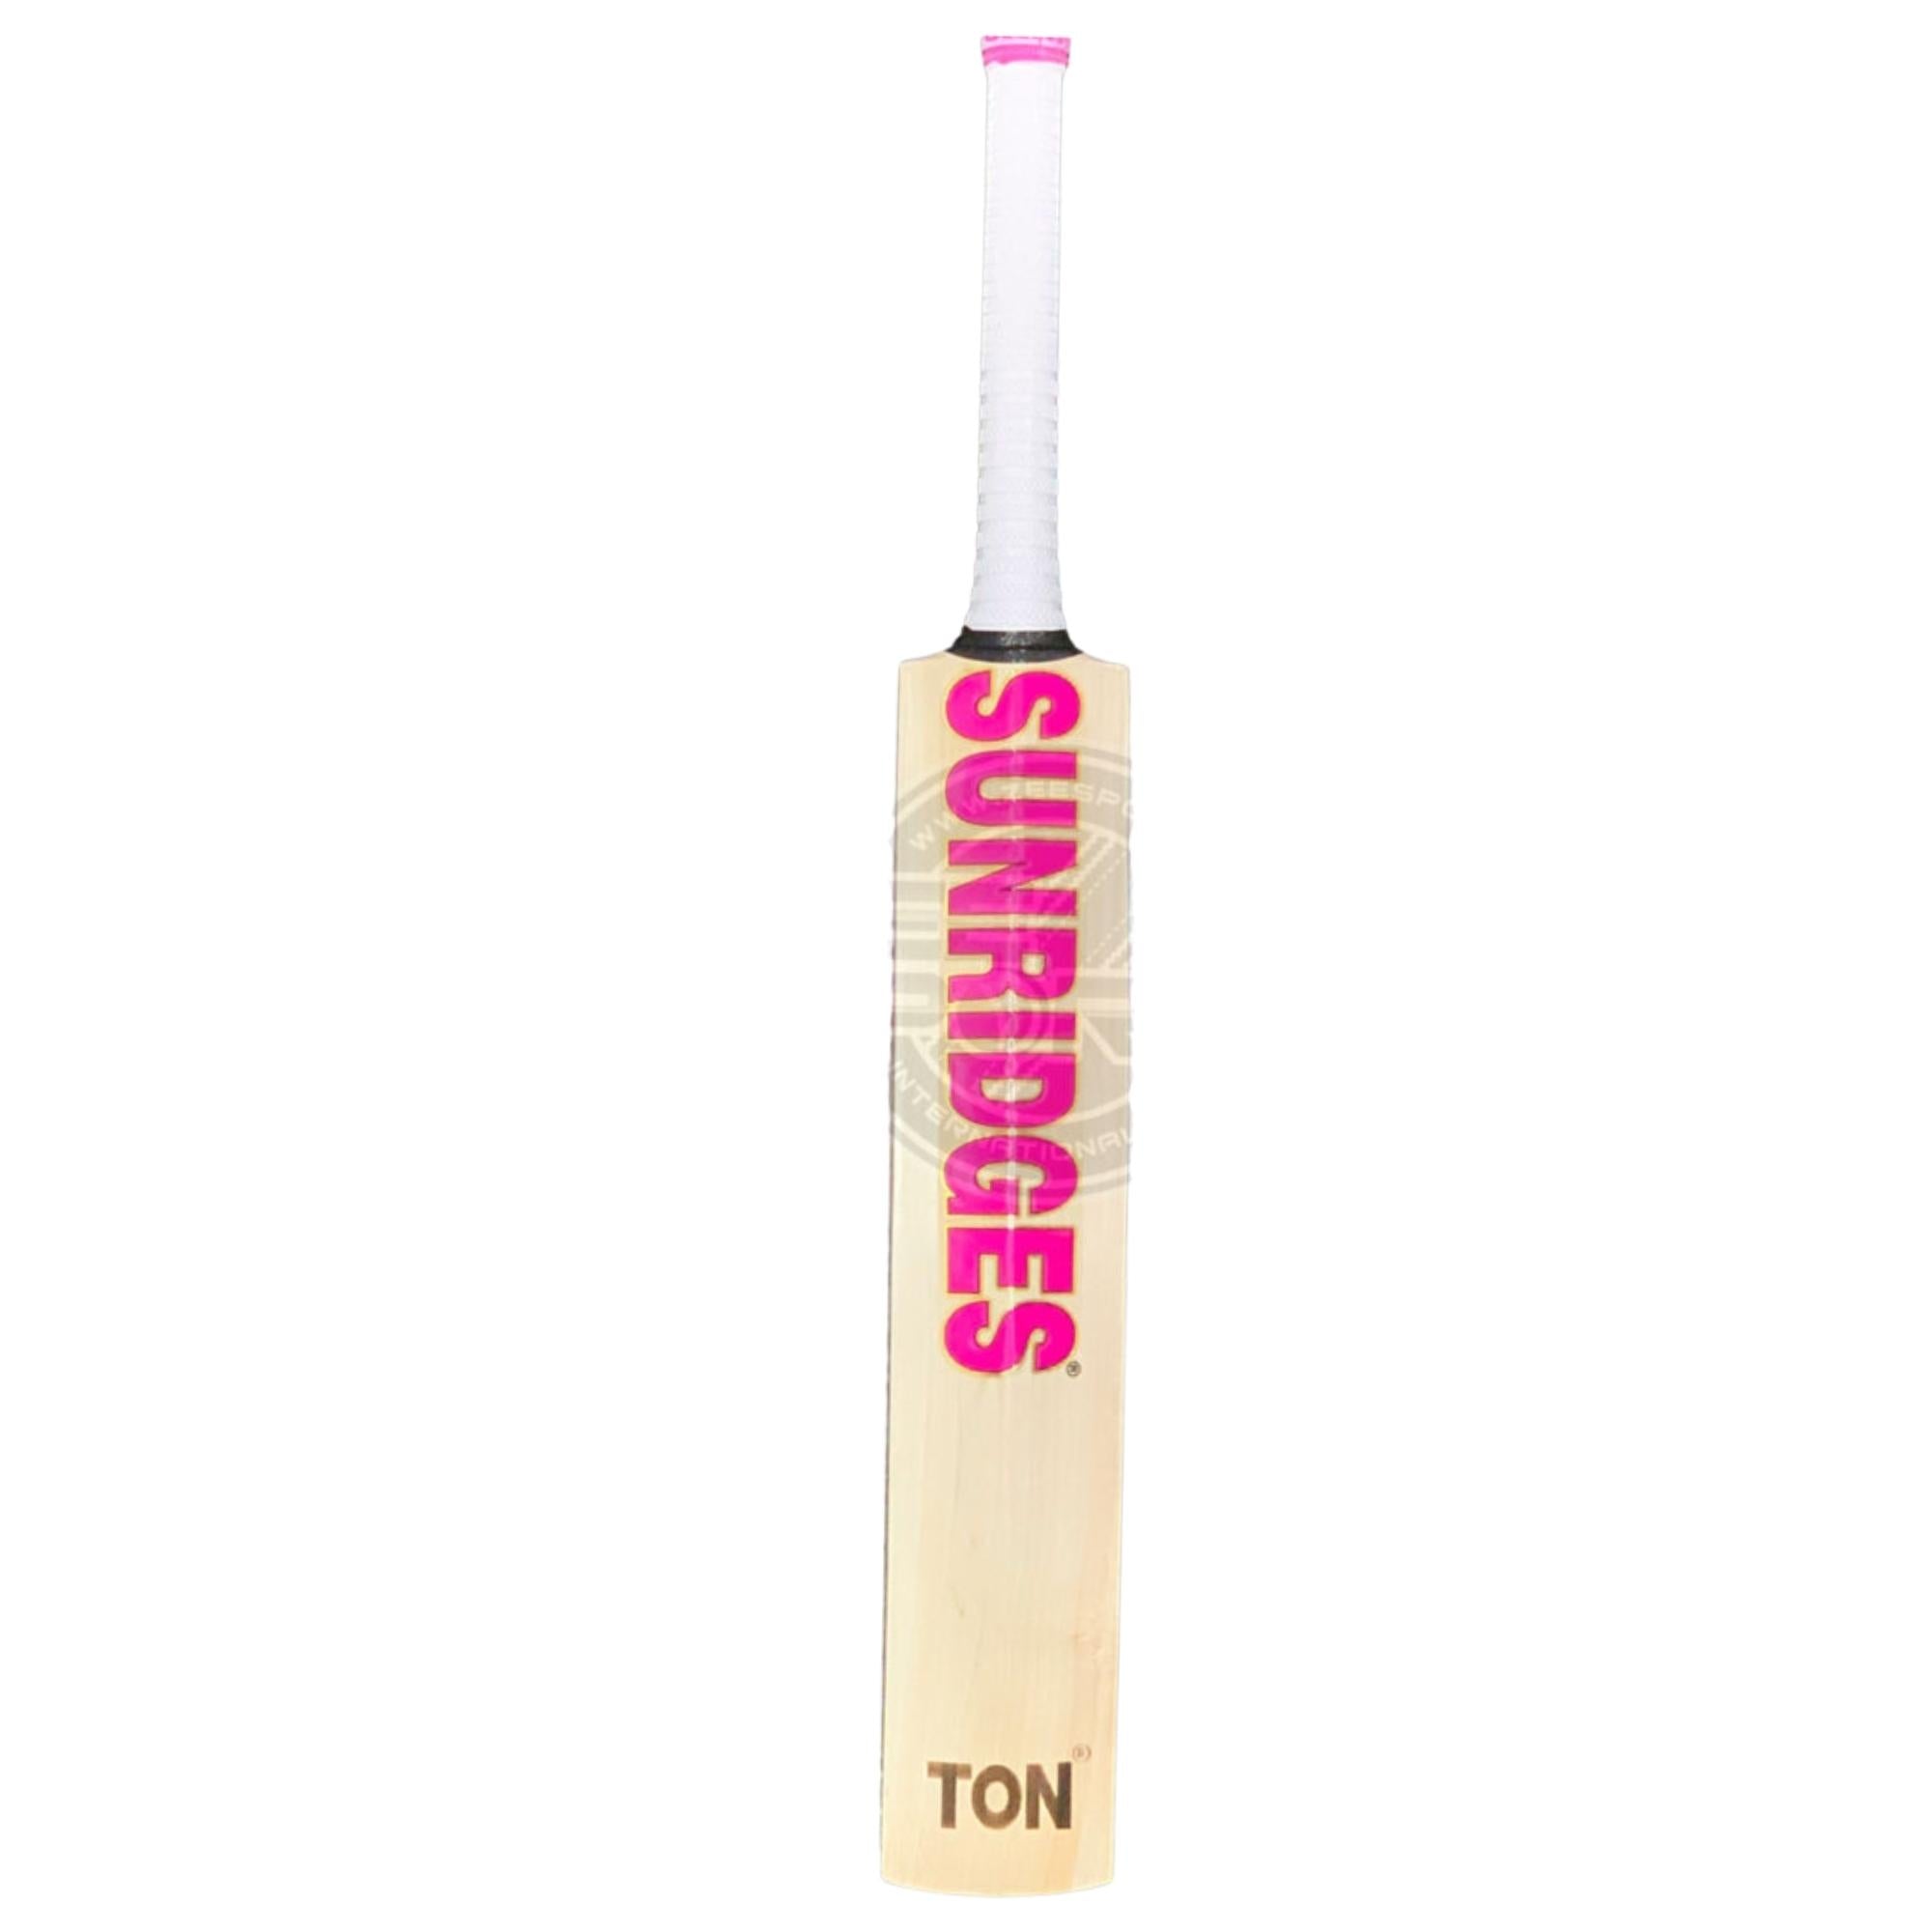 SS Ton Sunridges Gutsy Retro Classic Cricket Bat